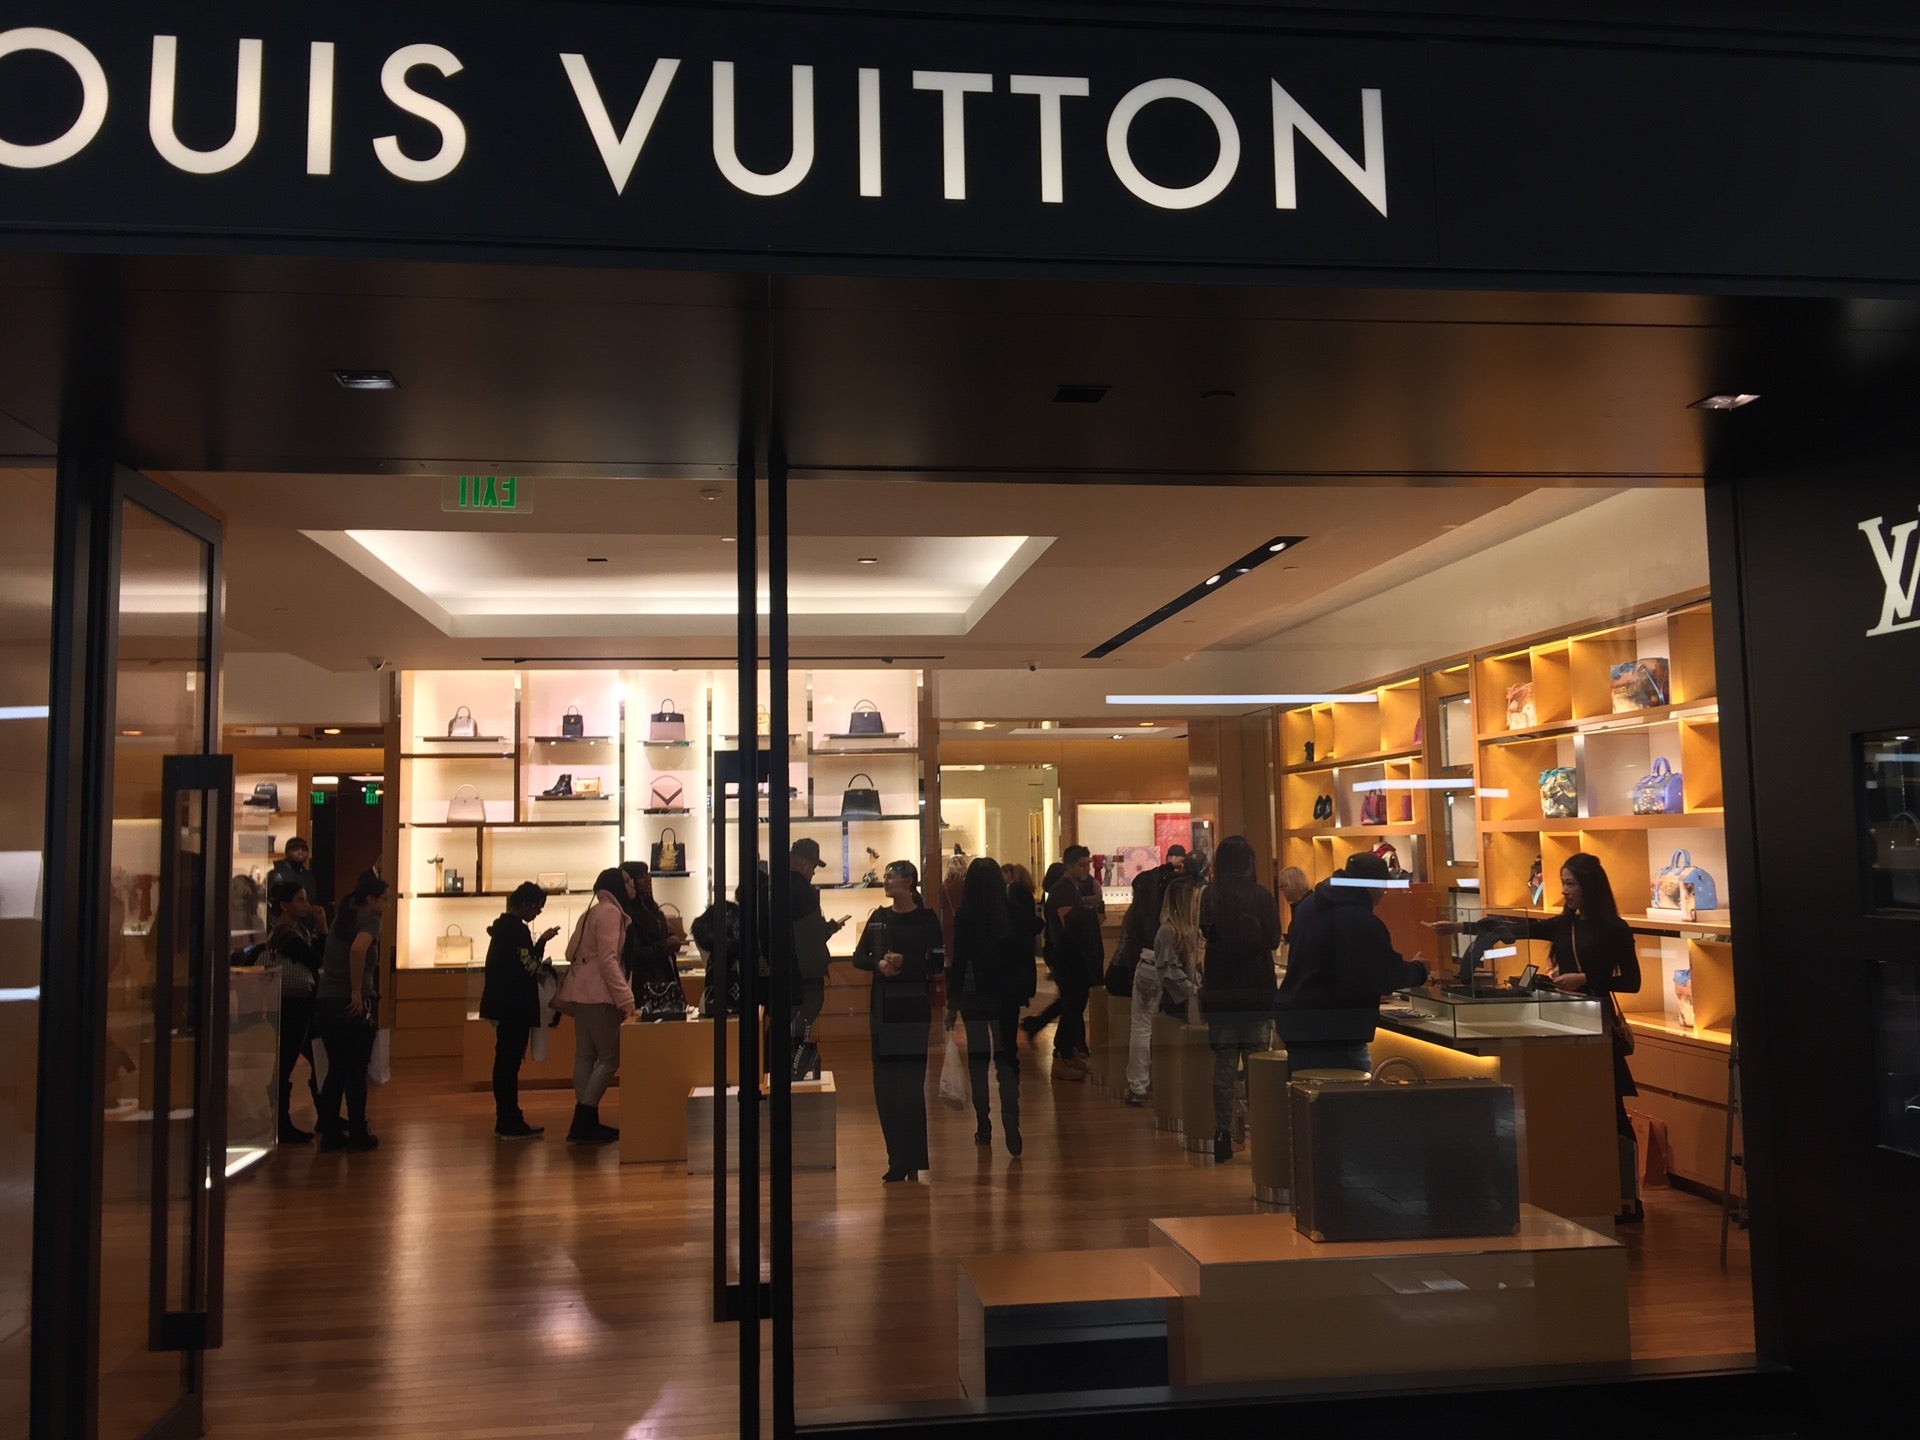 Louis Vuitton Short Hills store, United States